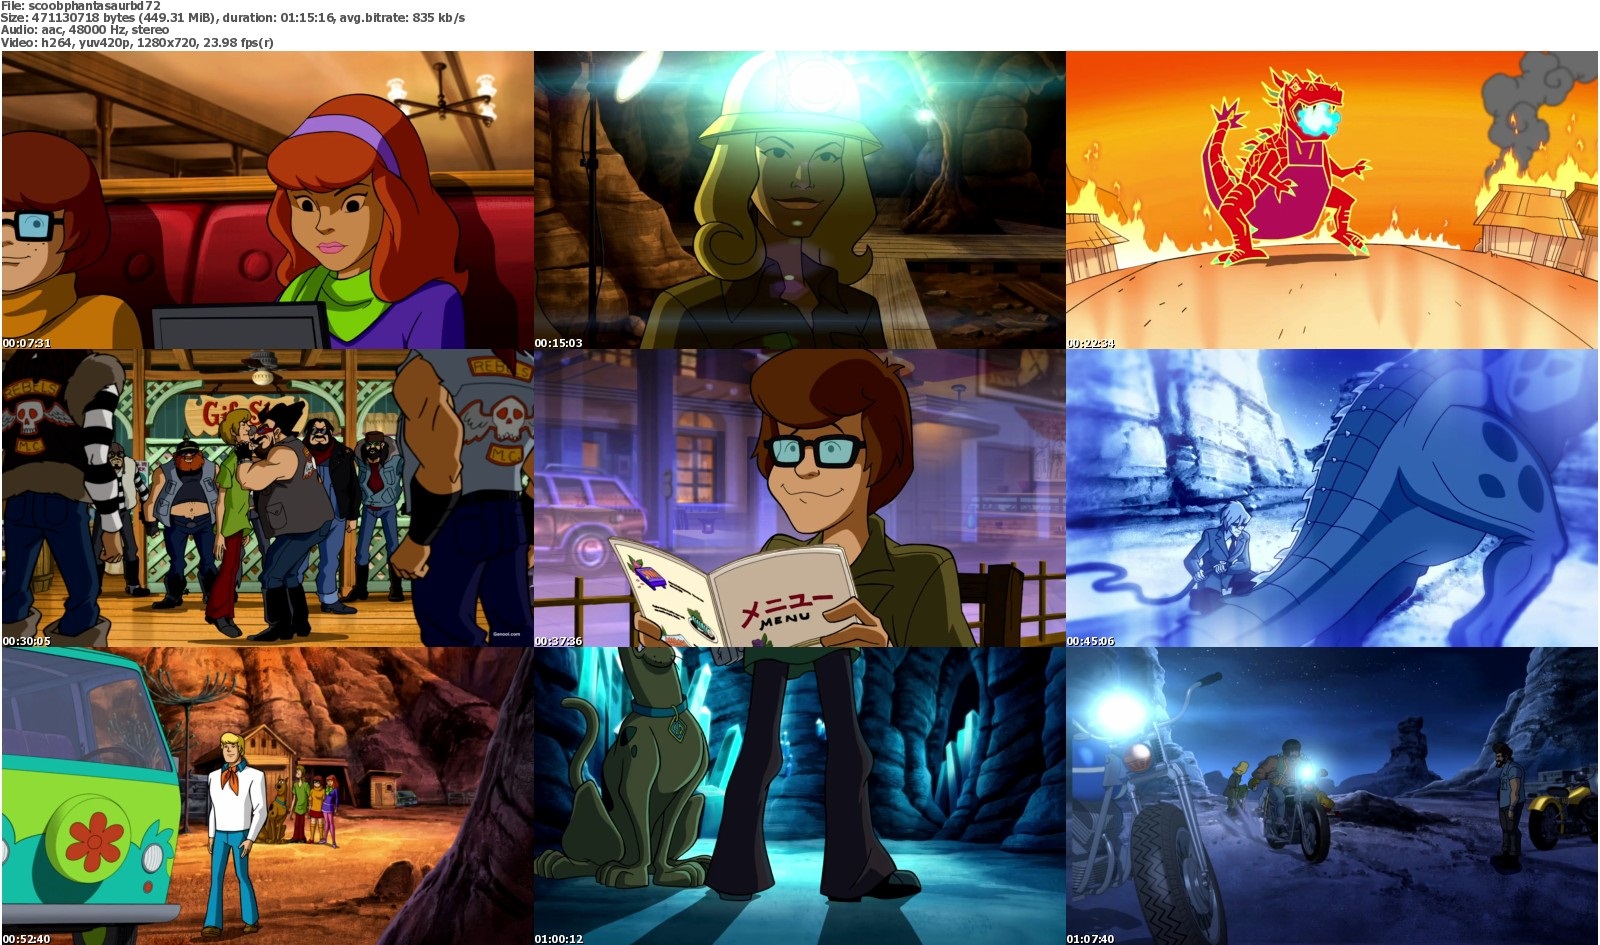 http://1.bp.blogspot.com/-QkXC59ppZn8/TqDeklUBWPI/AAAAAAAABqc/1vK0efB0WFE/s1600/Scooby+Doo+Legend+Of+The+Phantosaur+%25282011%2529+BluRay+720p+450MB.jpg